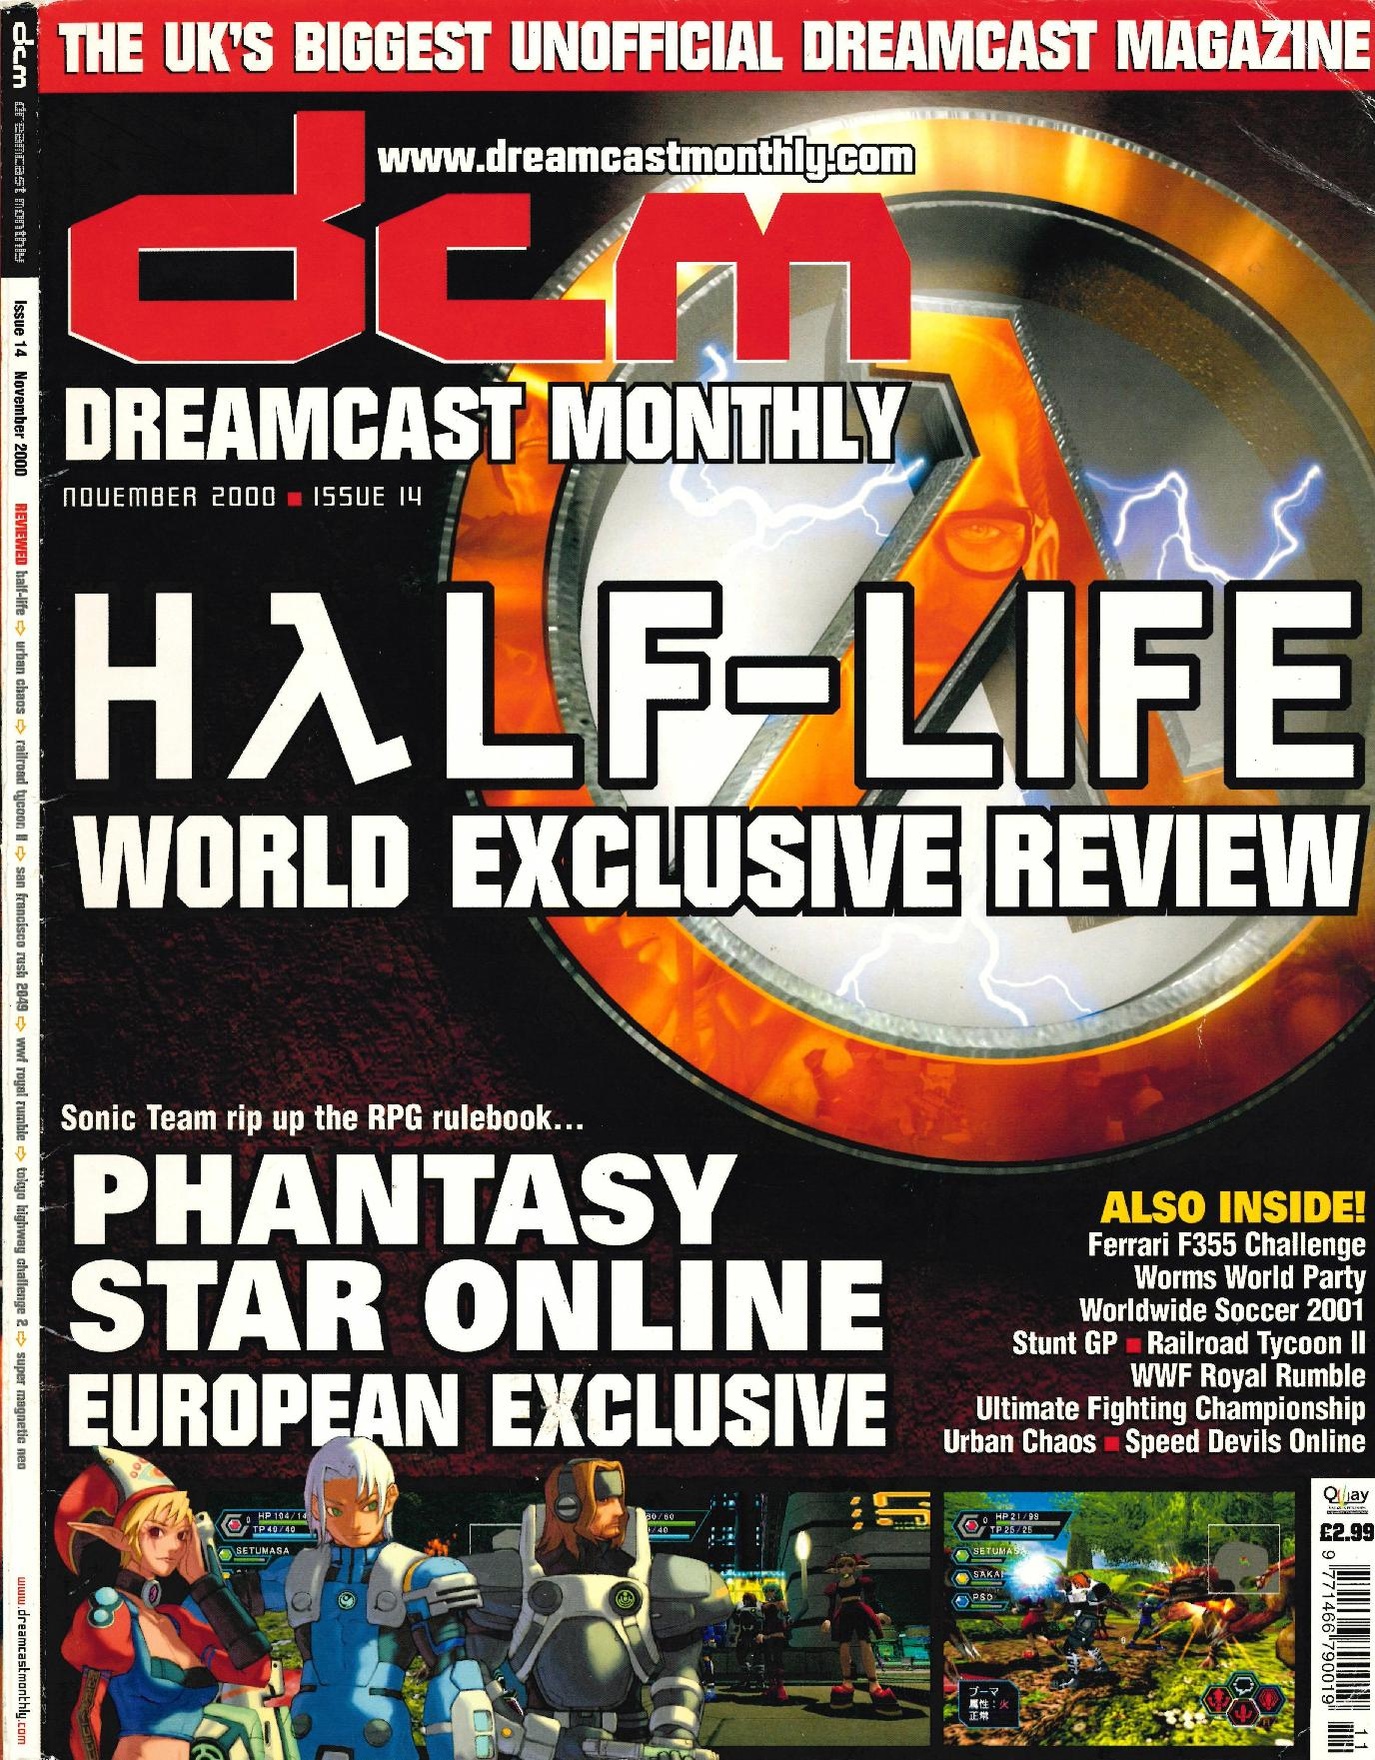 DreamcastMonthly UK 14.pdf